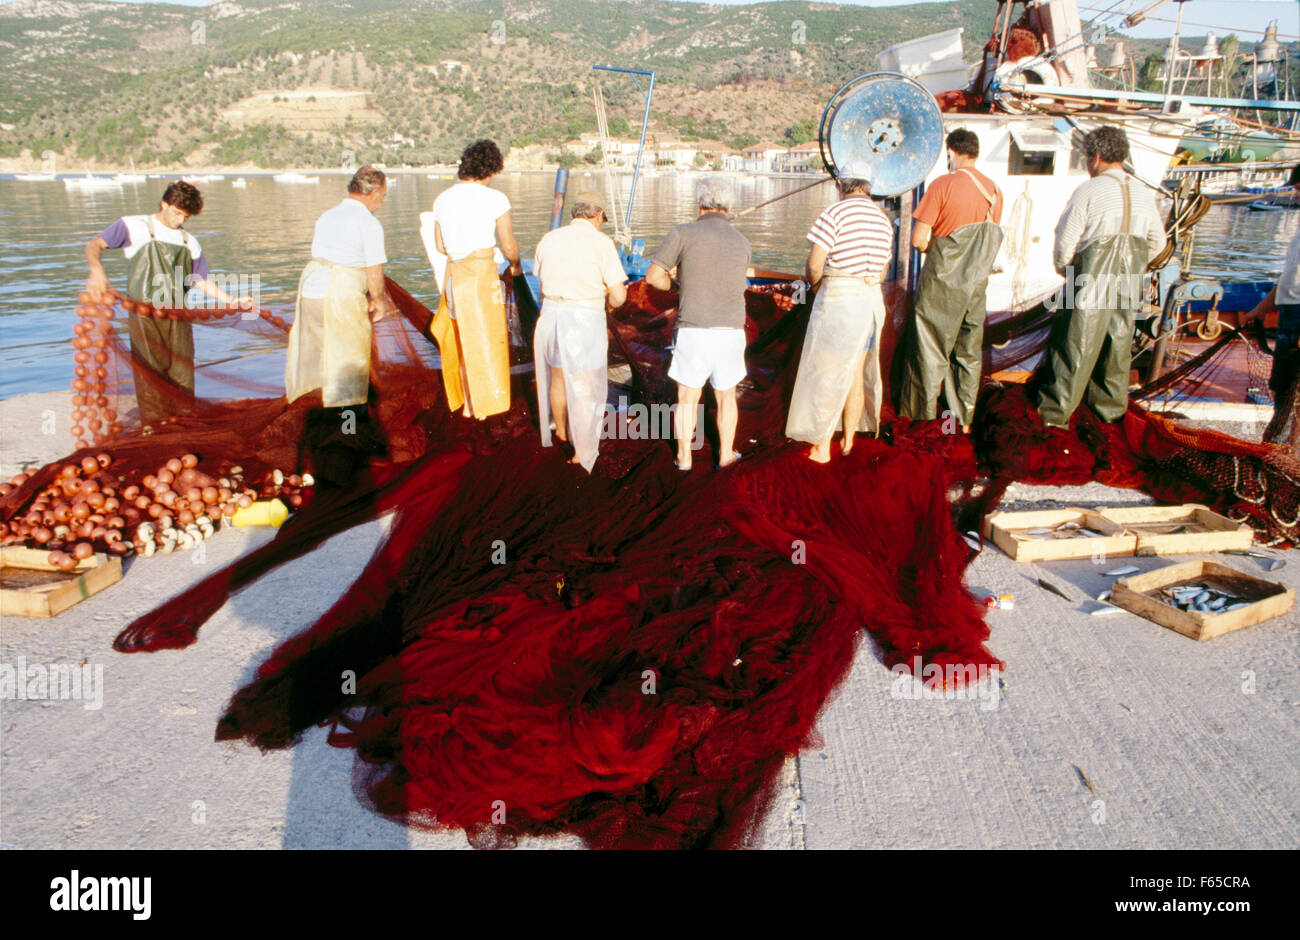 Fishermen organizing their fishing nets on pier in Platania, Italy Stock Photo